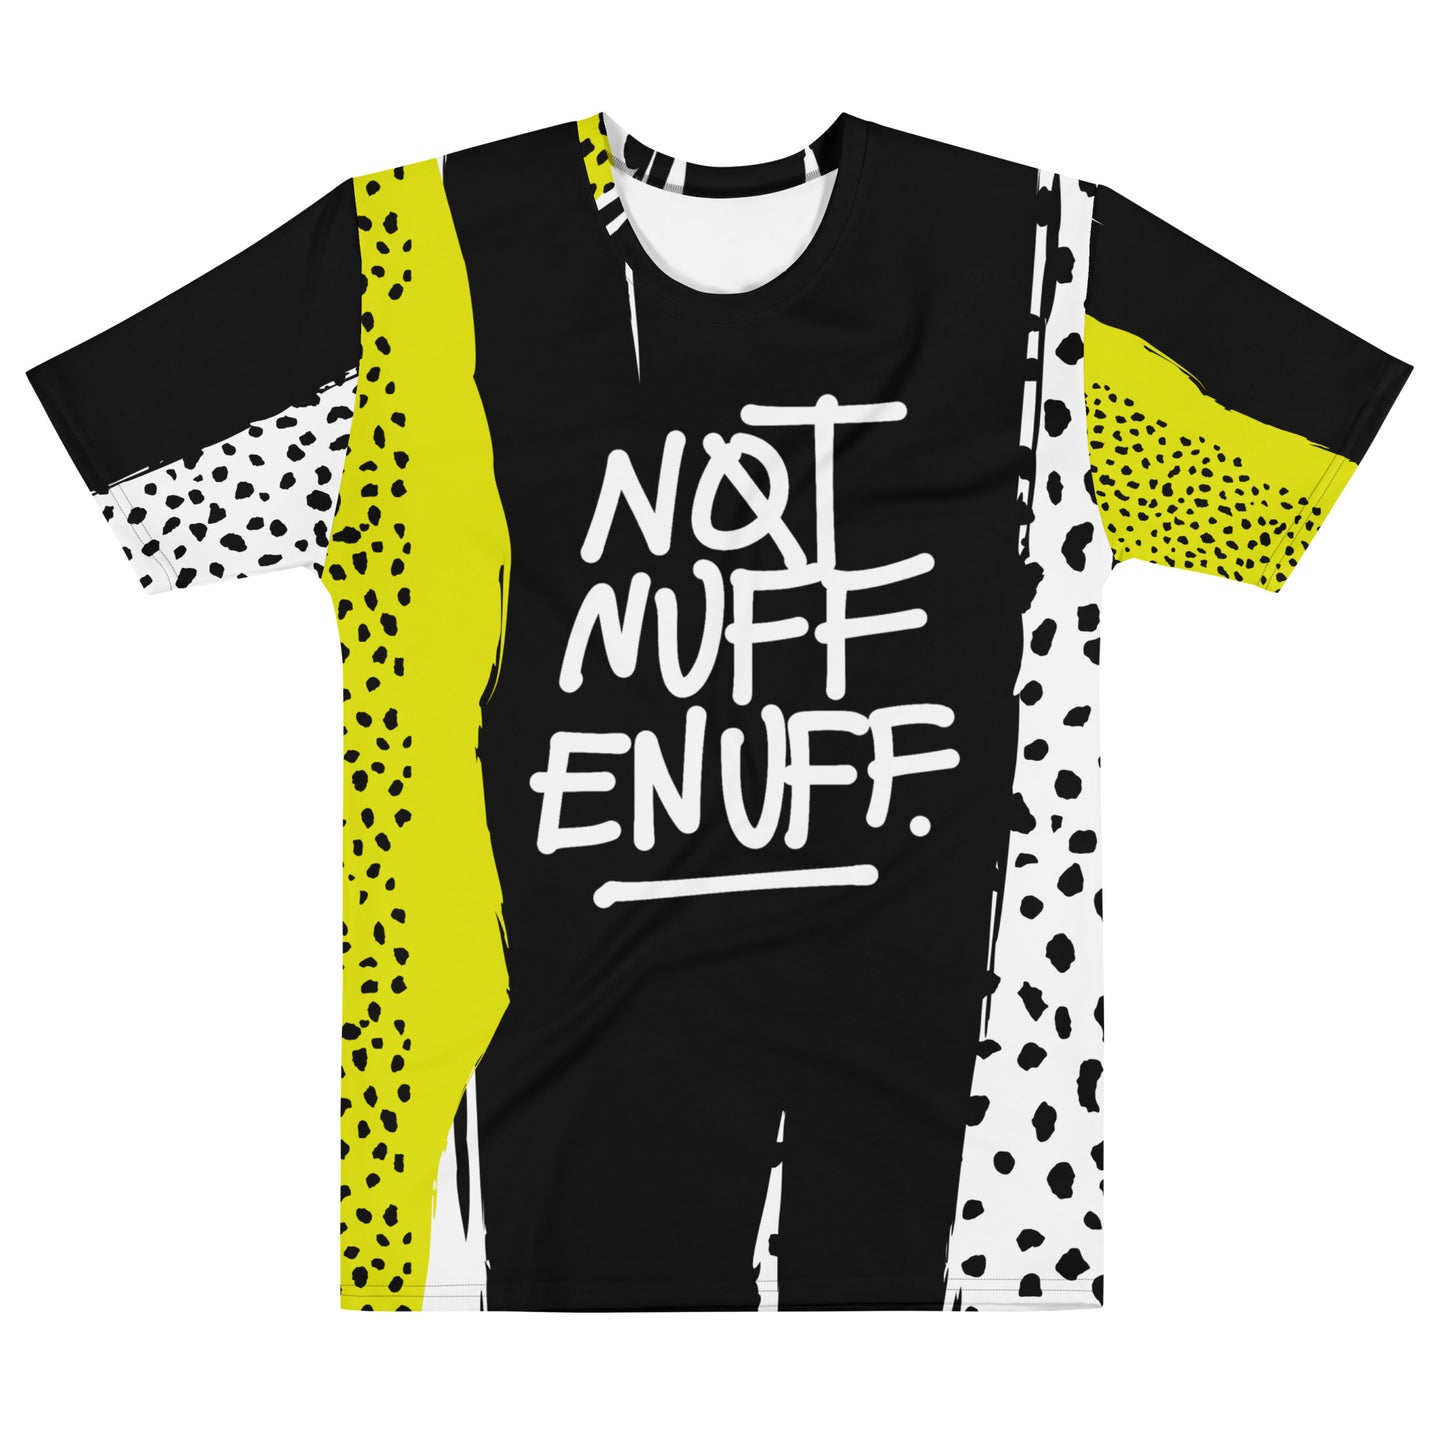 NOT NUFF eNUFF - Men's Crew Neck T-Shirt